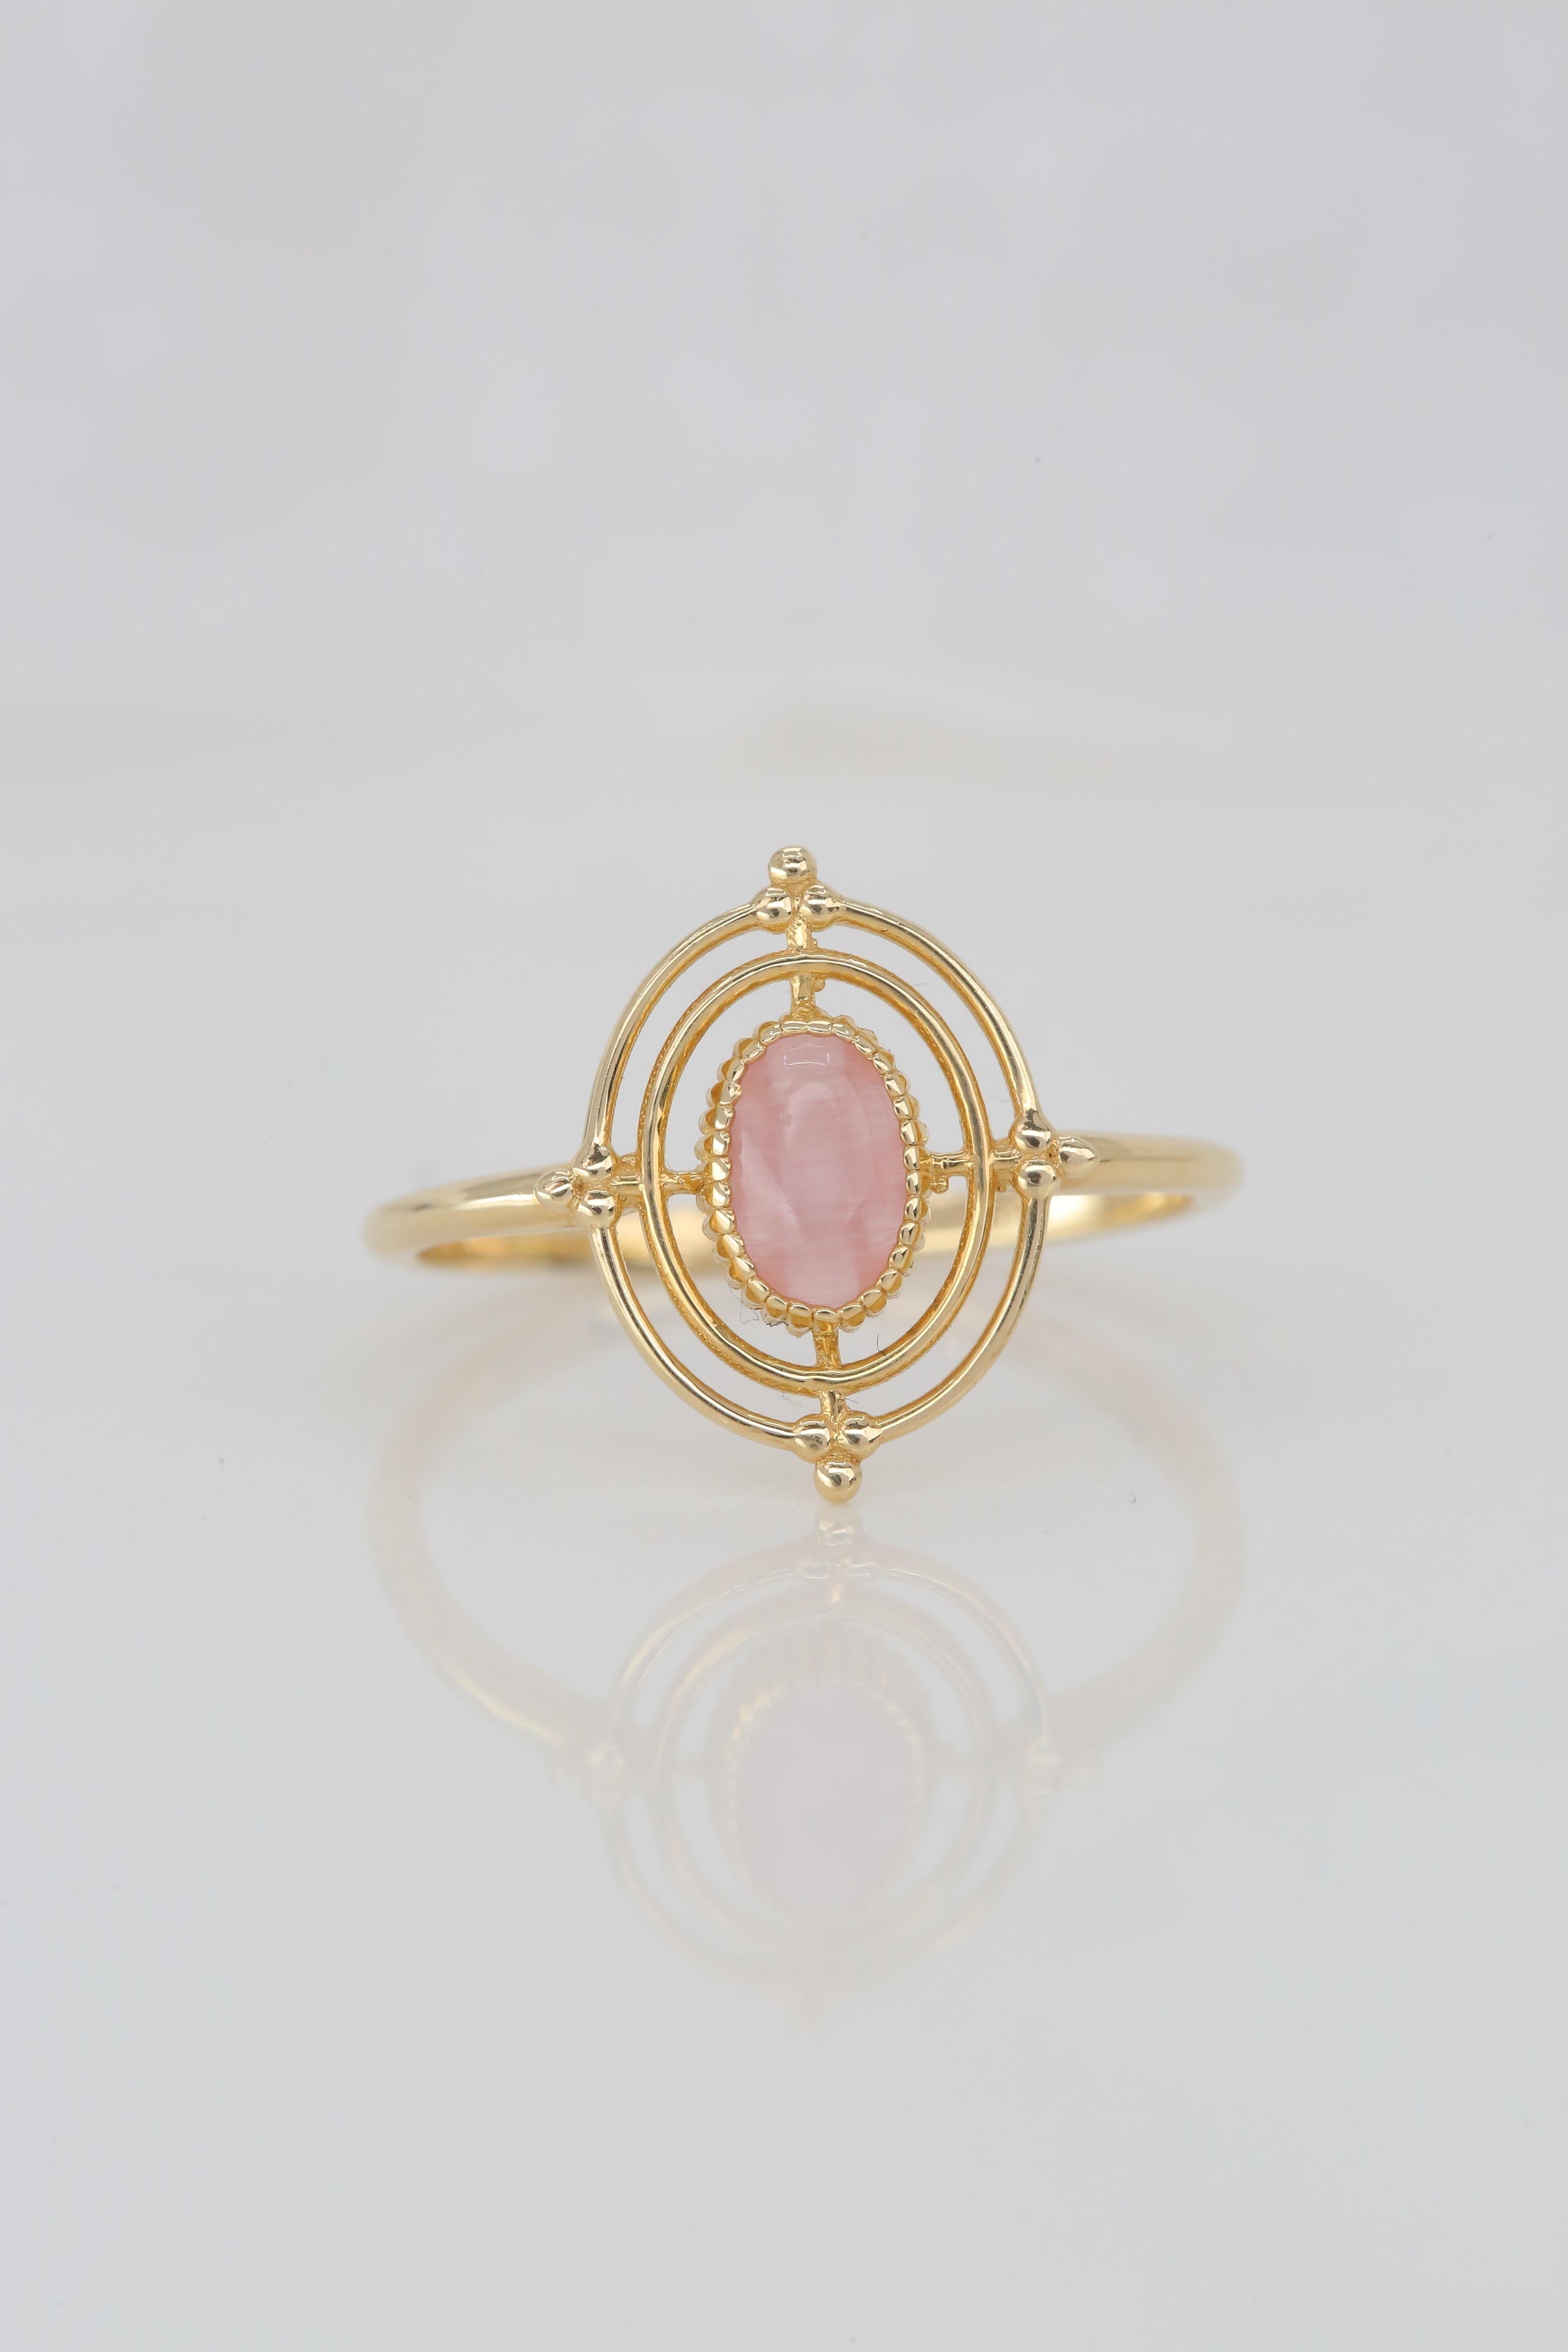 For Sale:  14K Gold Vintage Style Oval Cut Pink Quartz Ring 6